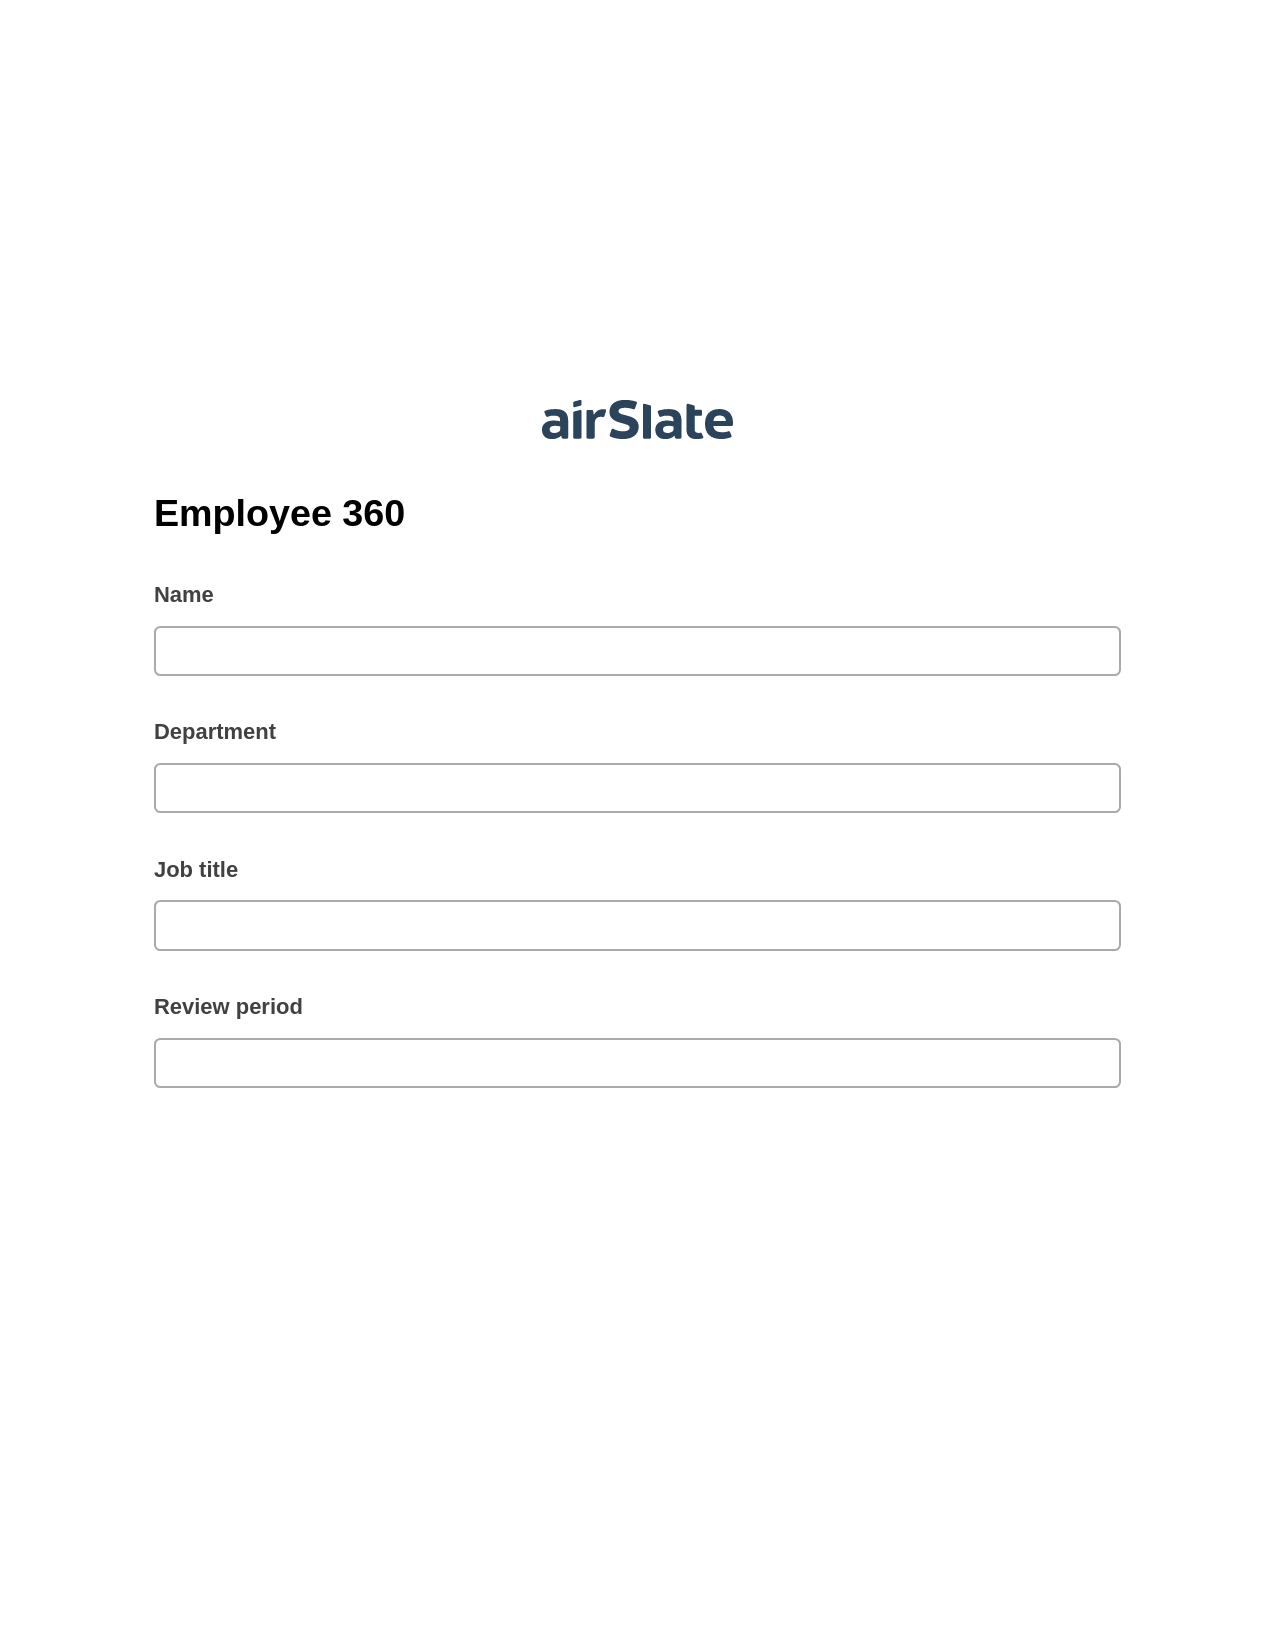 Multirole Employee 360 Pre-fill from CSV File Bot, Google Calendar Bot, Export to WebMerge Bot